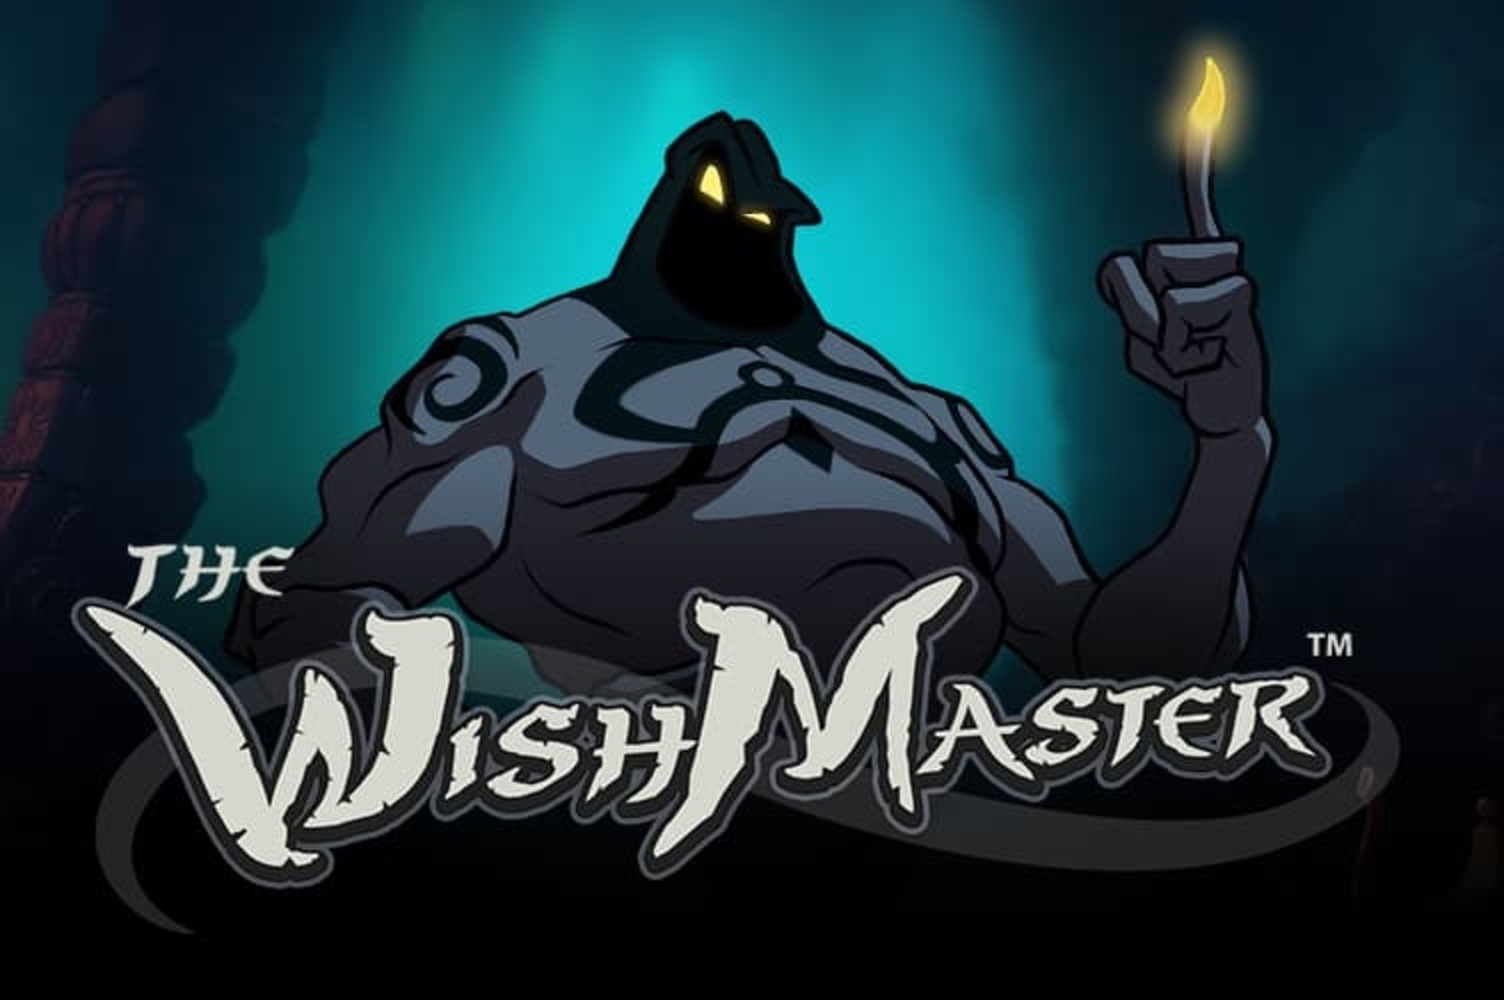 The Wish Master demo